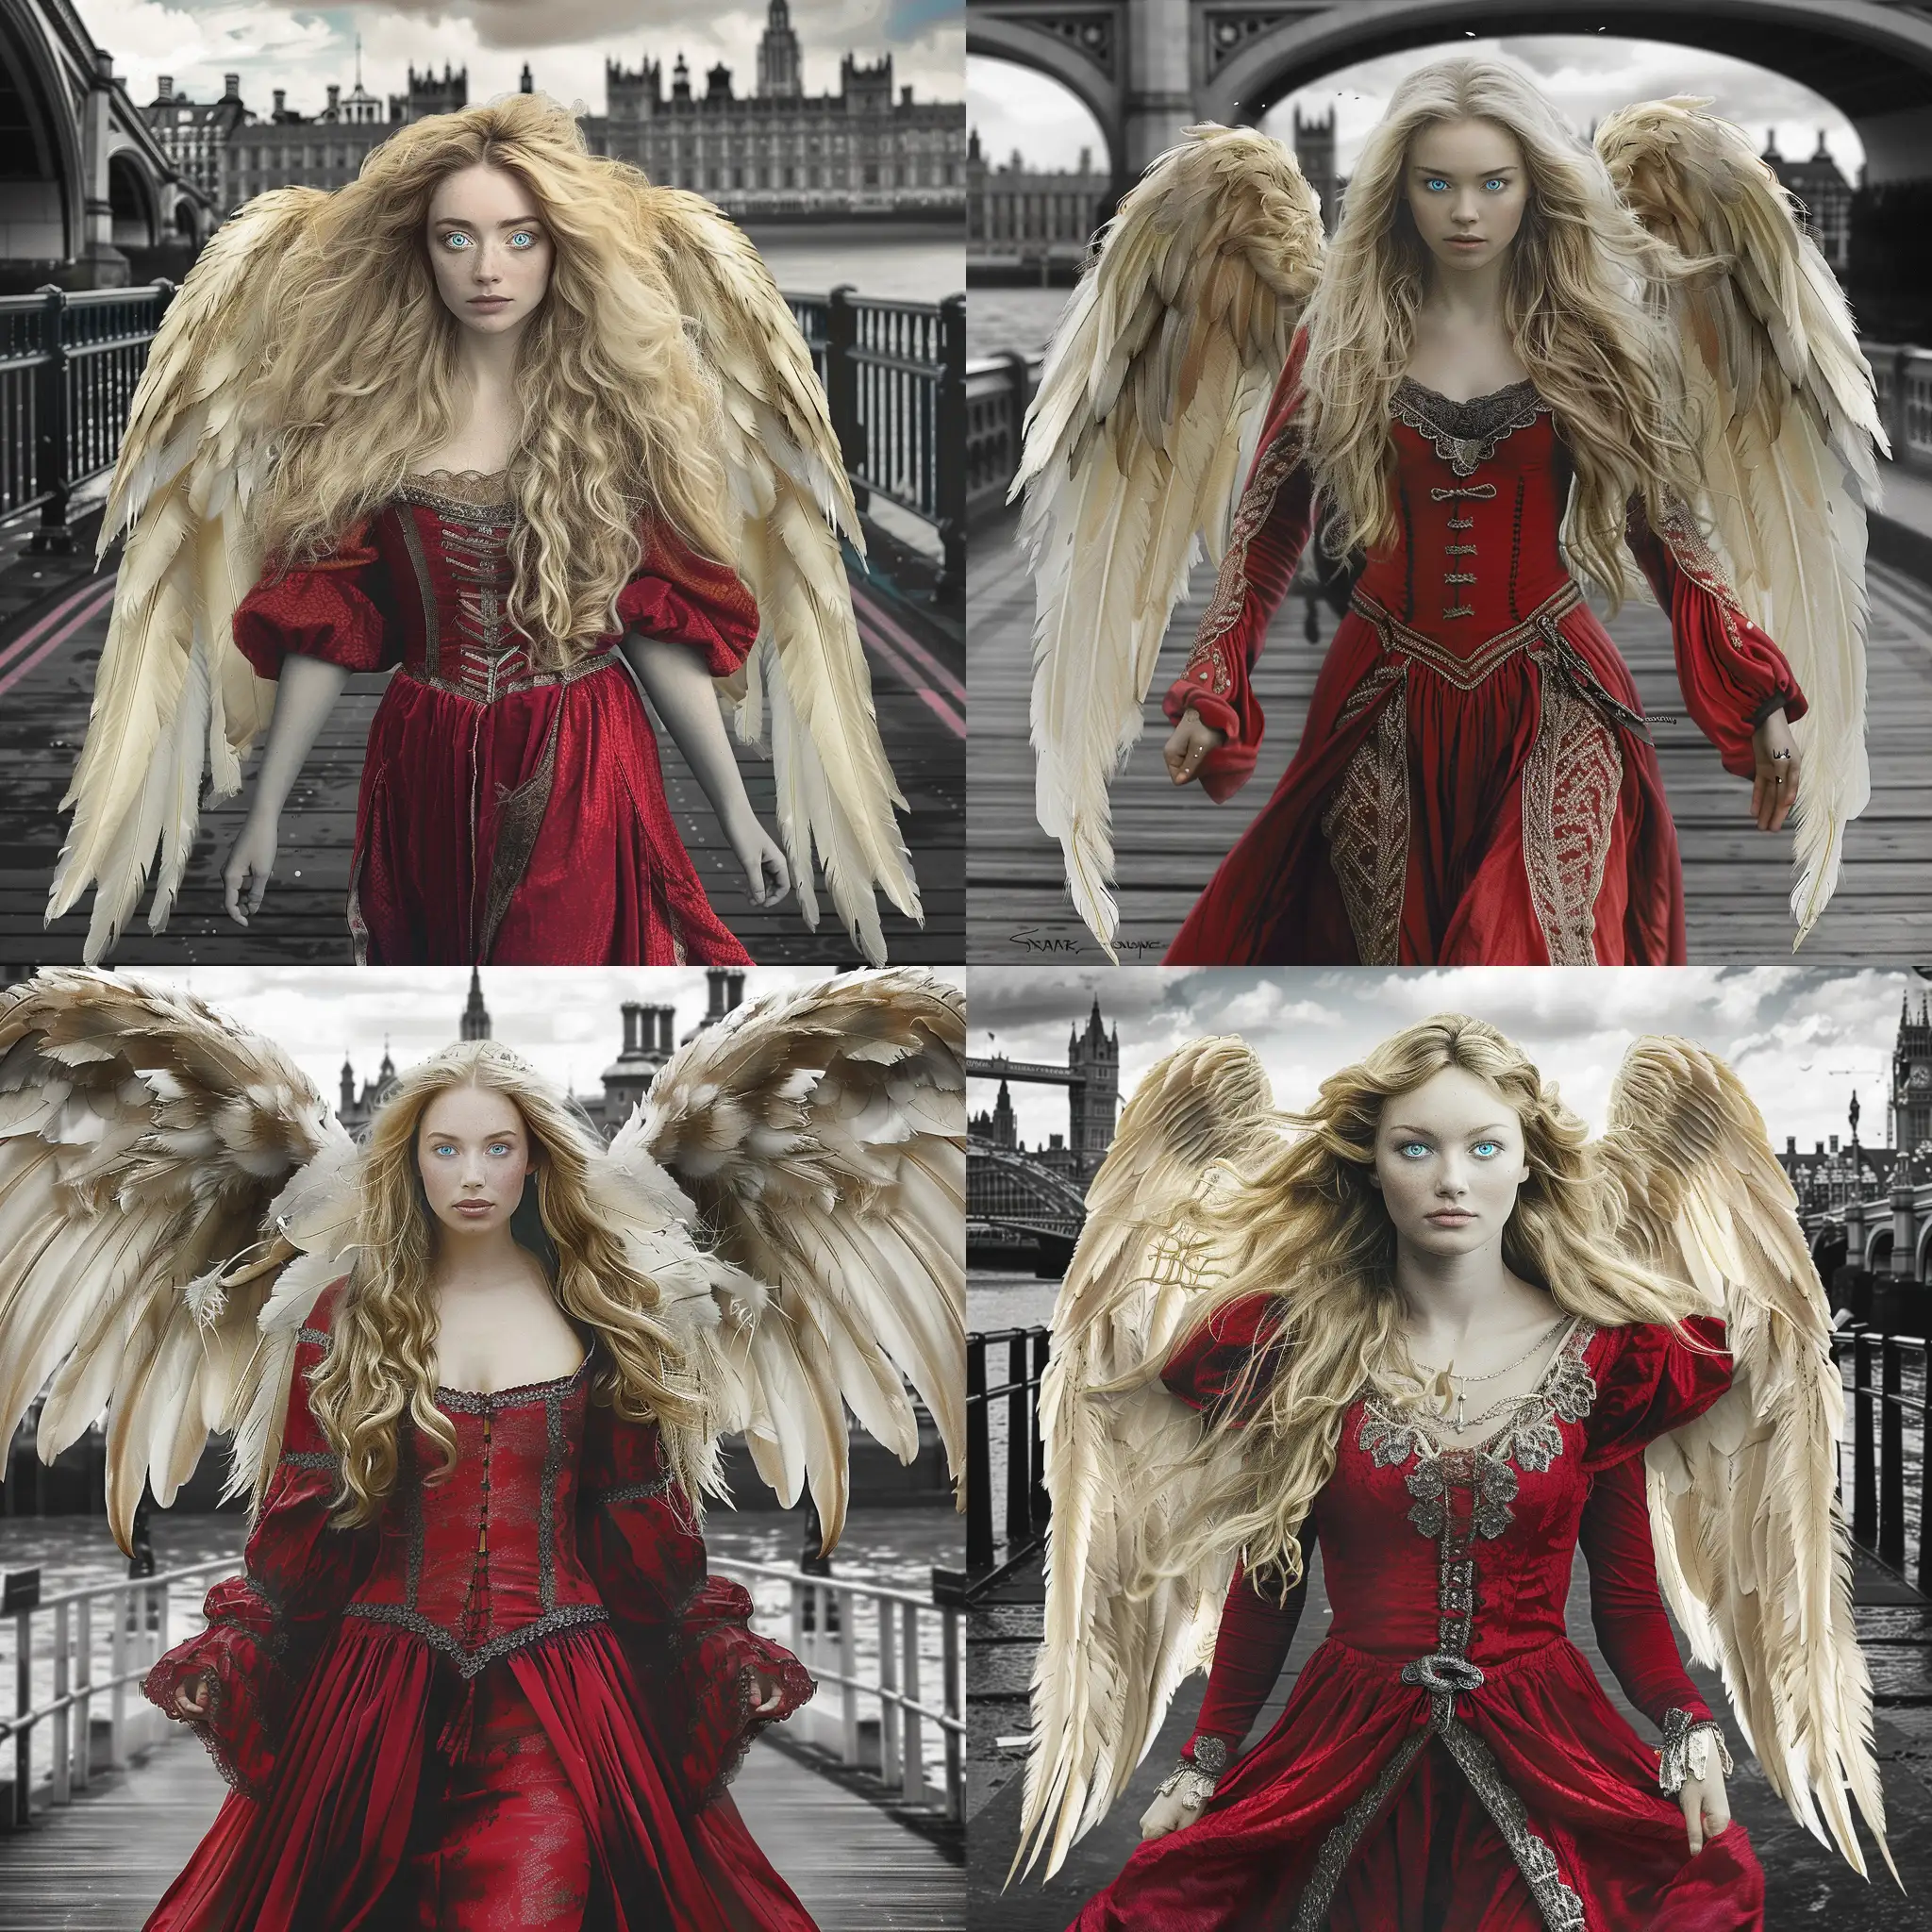 Enchanting-Blonde-Angel-in-Medieval-Attire-Roaming-Londons-Riverside